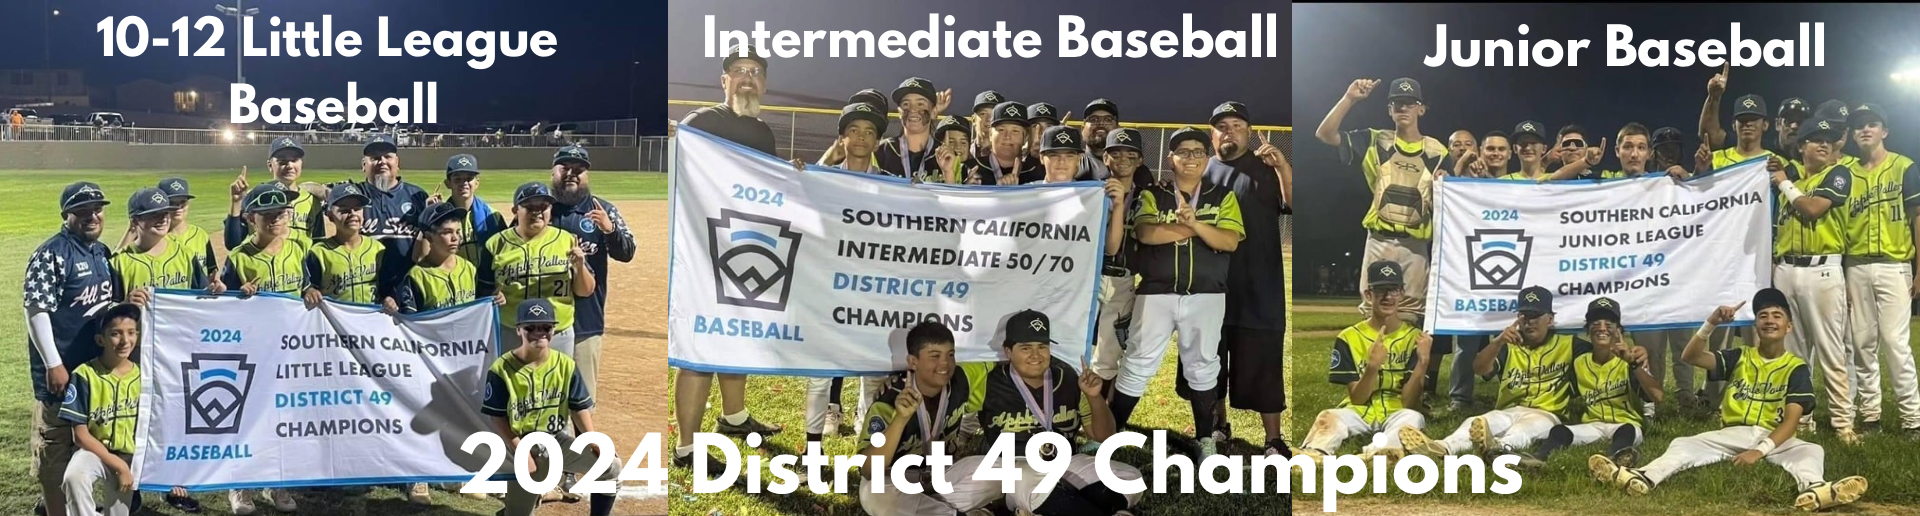 2024 Baseball All Star District Champions 